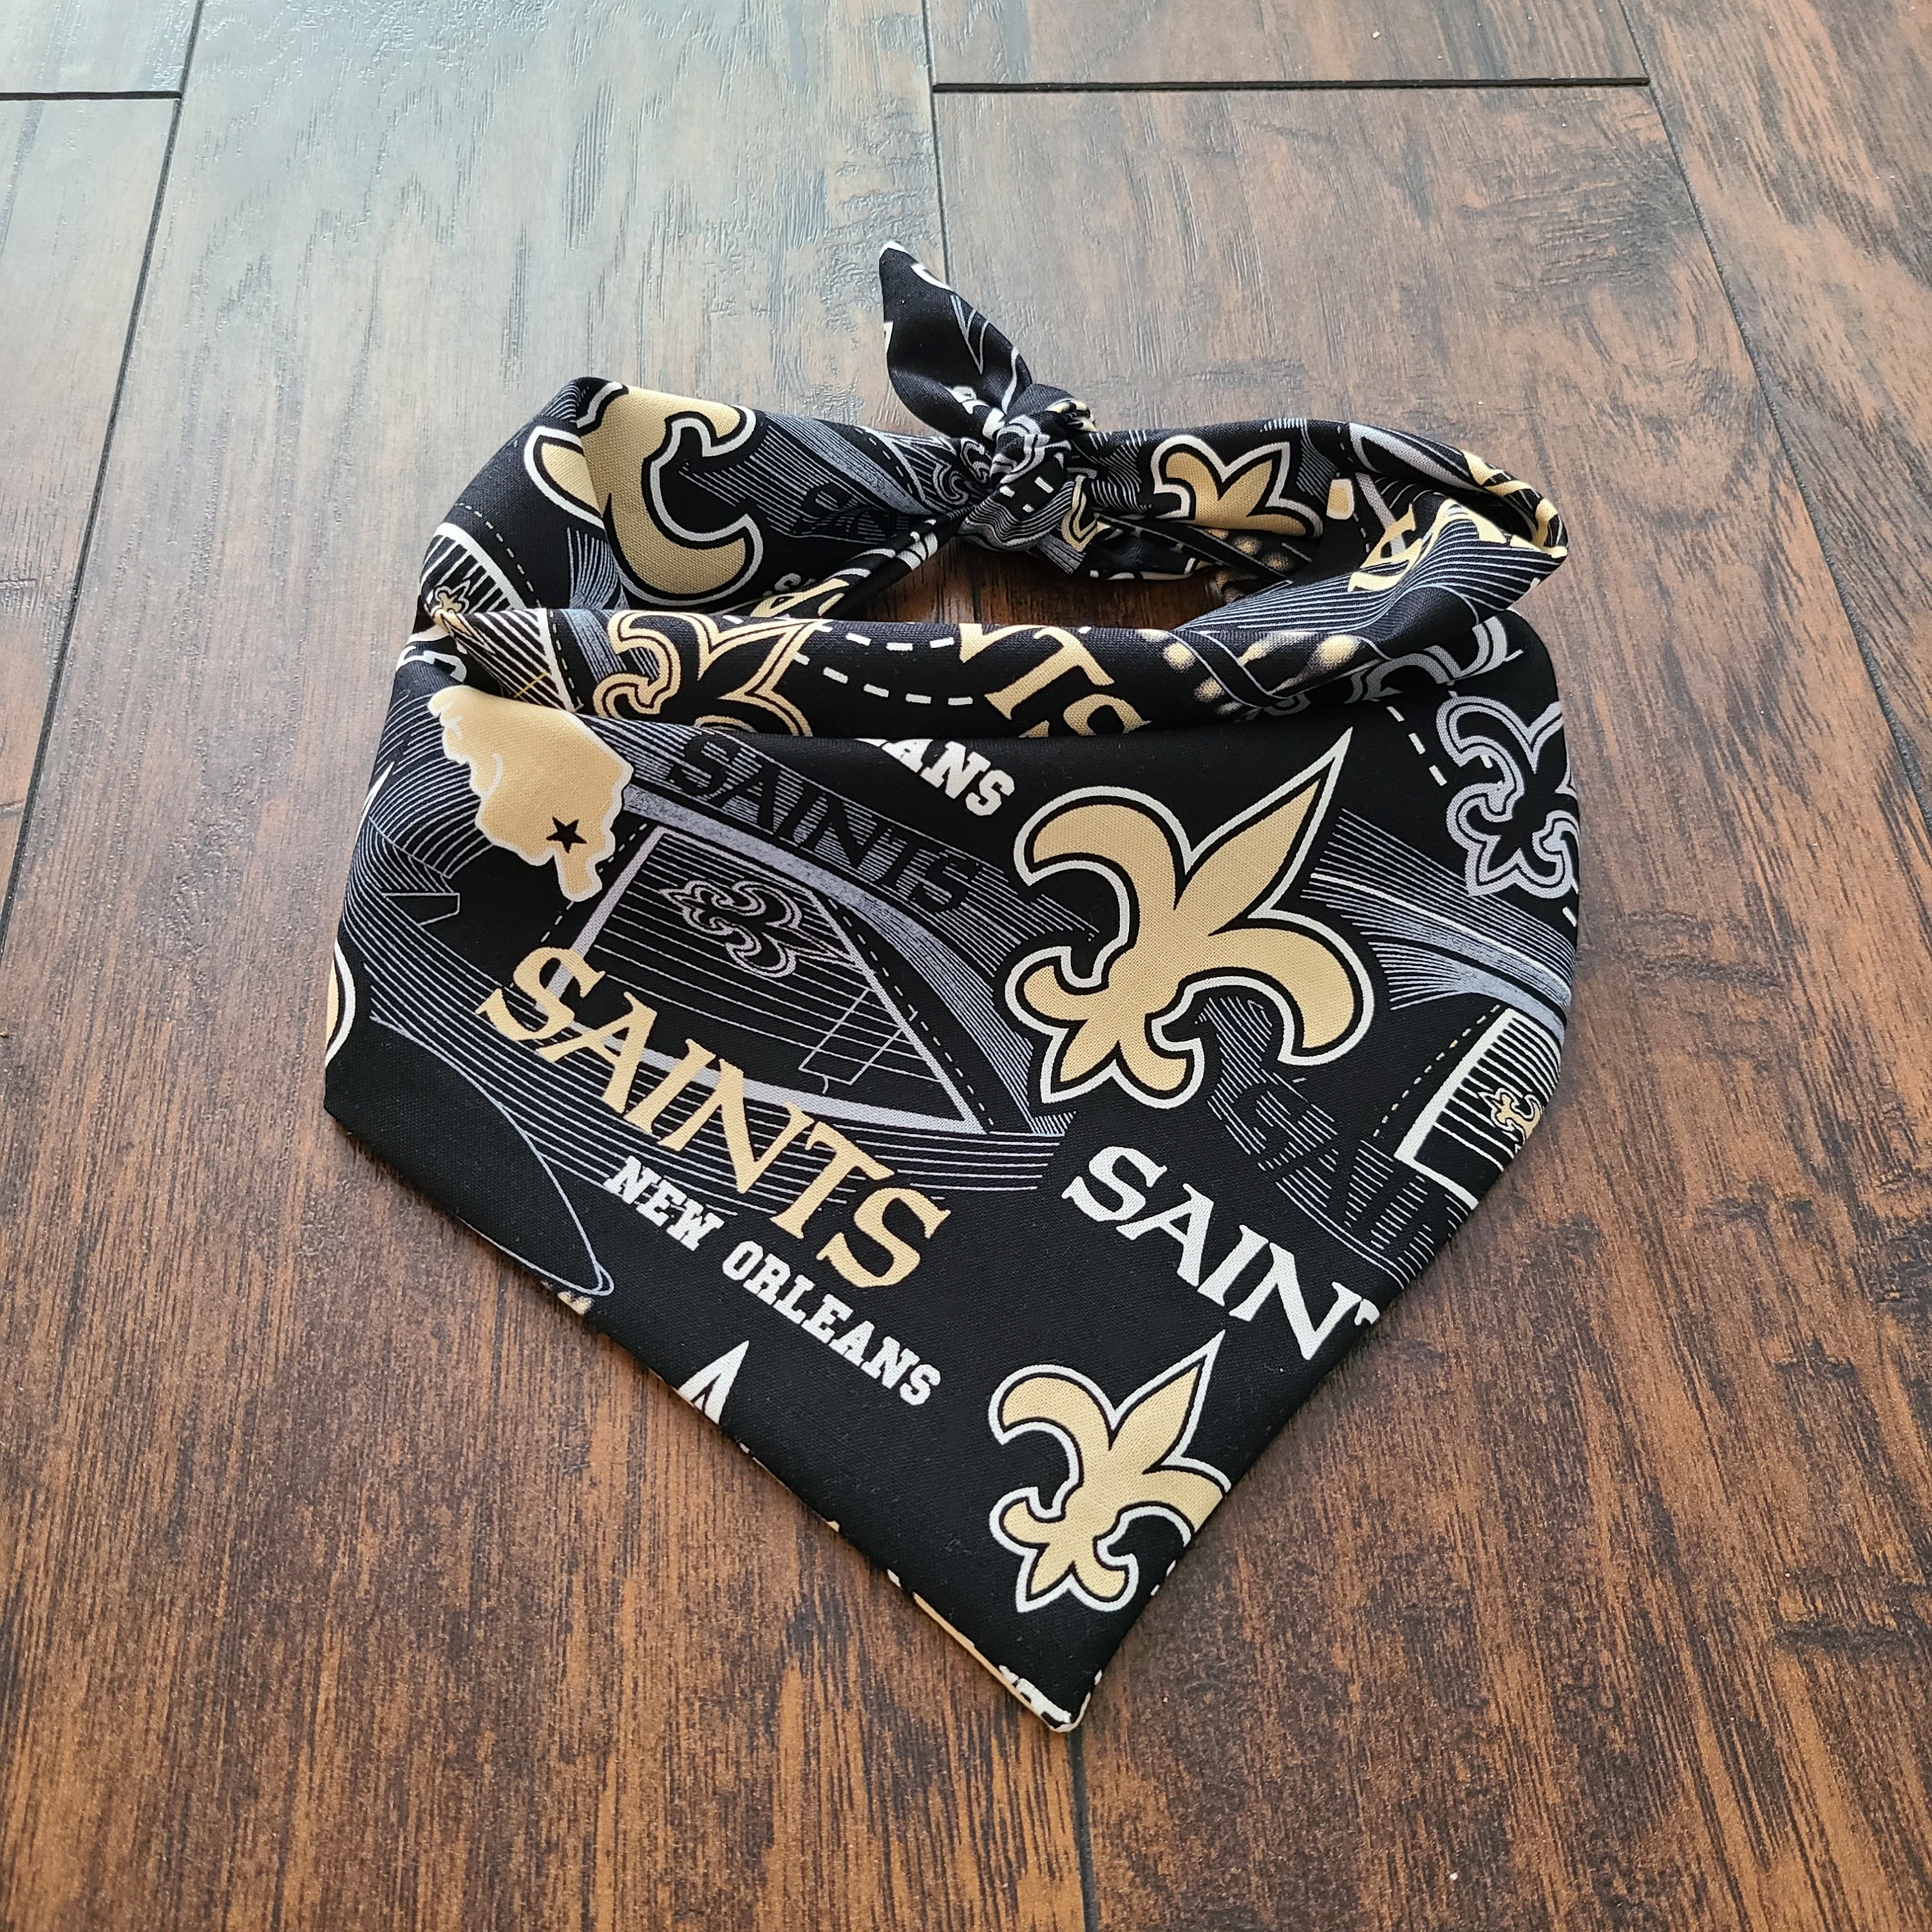 New Orleans Saints Jersey - GameDay Black Olave #12 - BLACK & GOLD SPORTS